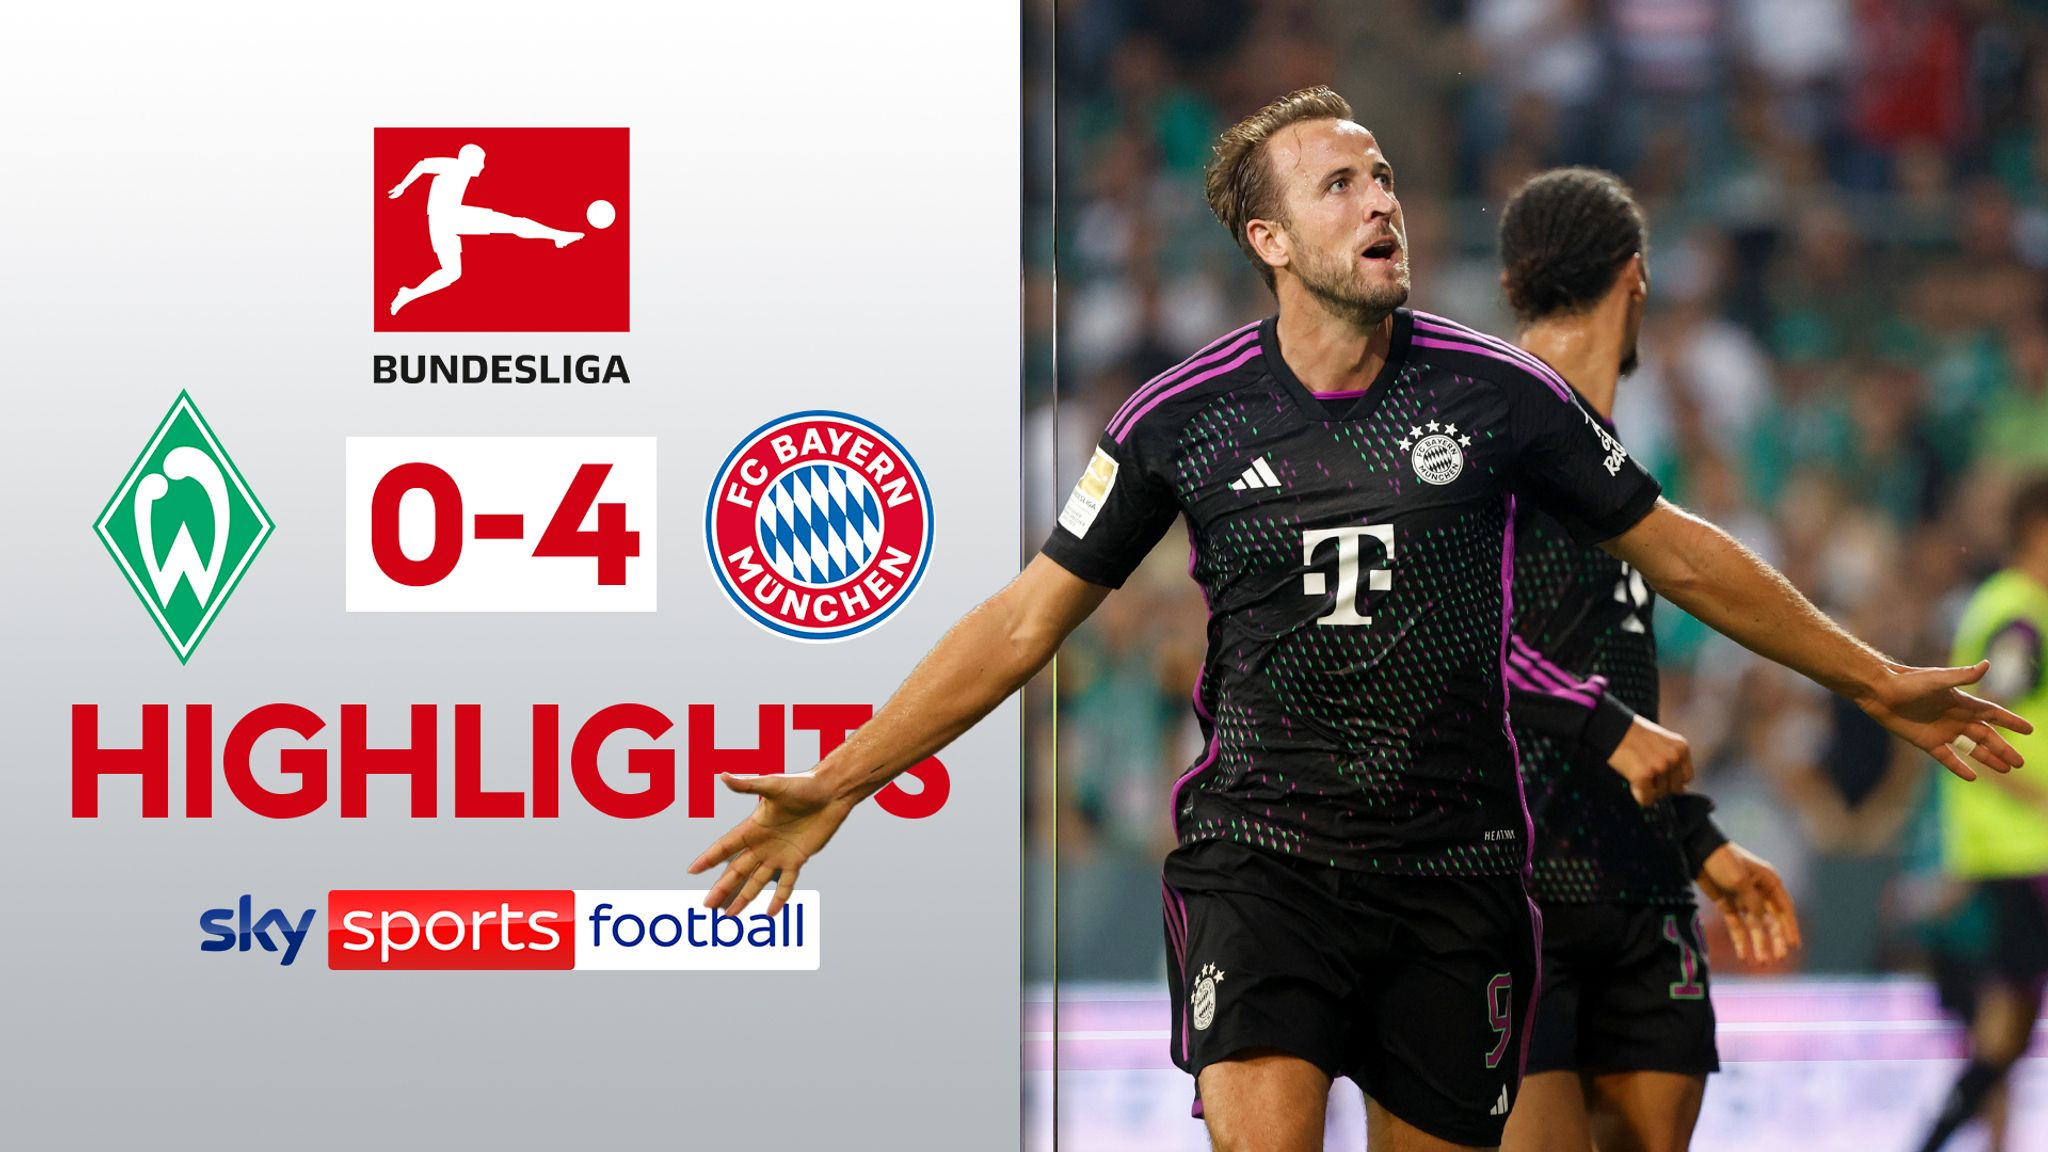 Werder Bremen 0-4 Bayern Munich highlights Kane scores and assists on Bundesliga debut Video Watch TV Show Sky Sports